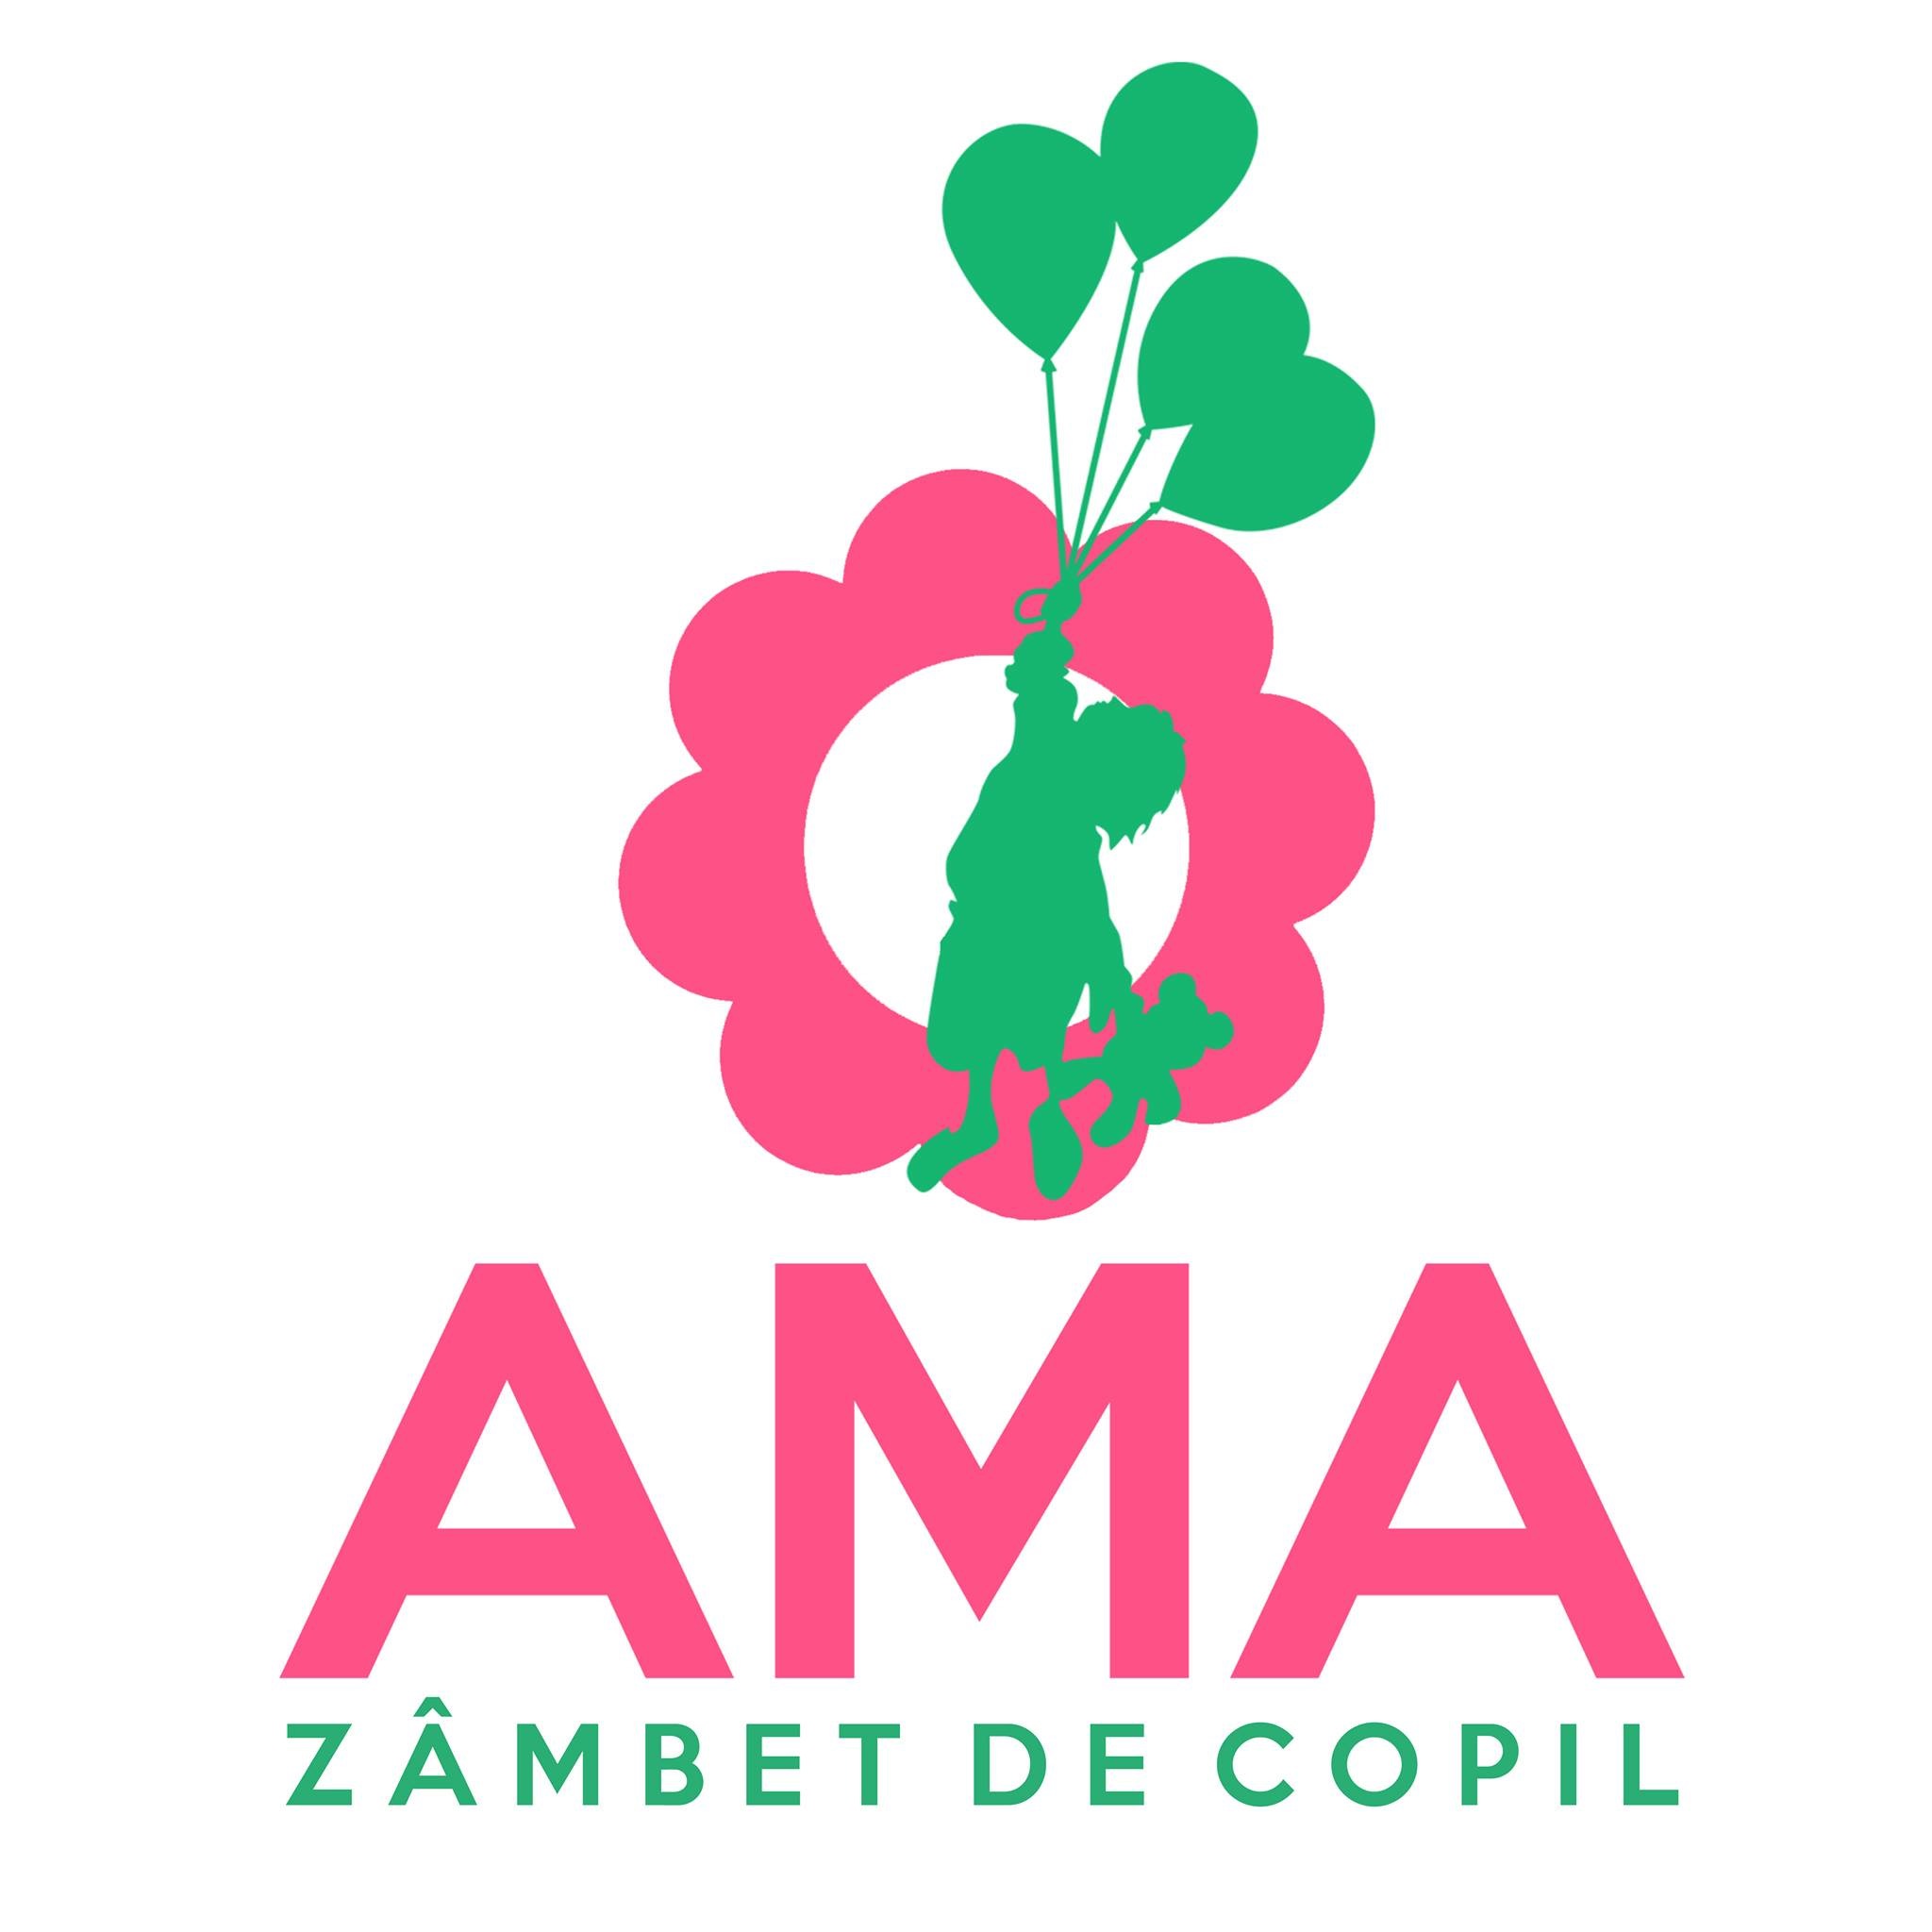 AMA ZAMBET DE COPIL logo